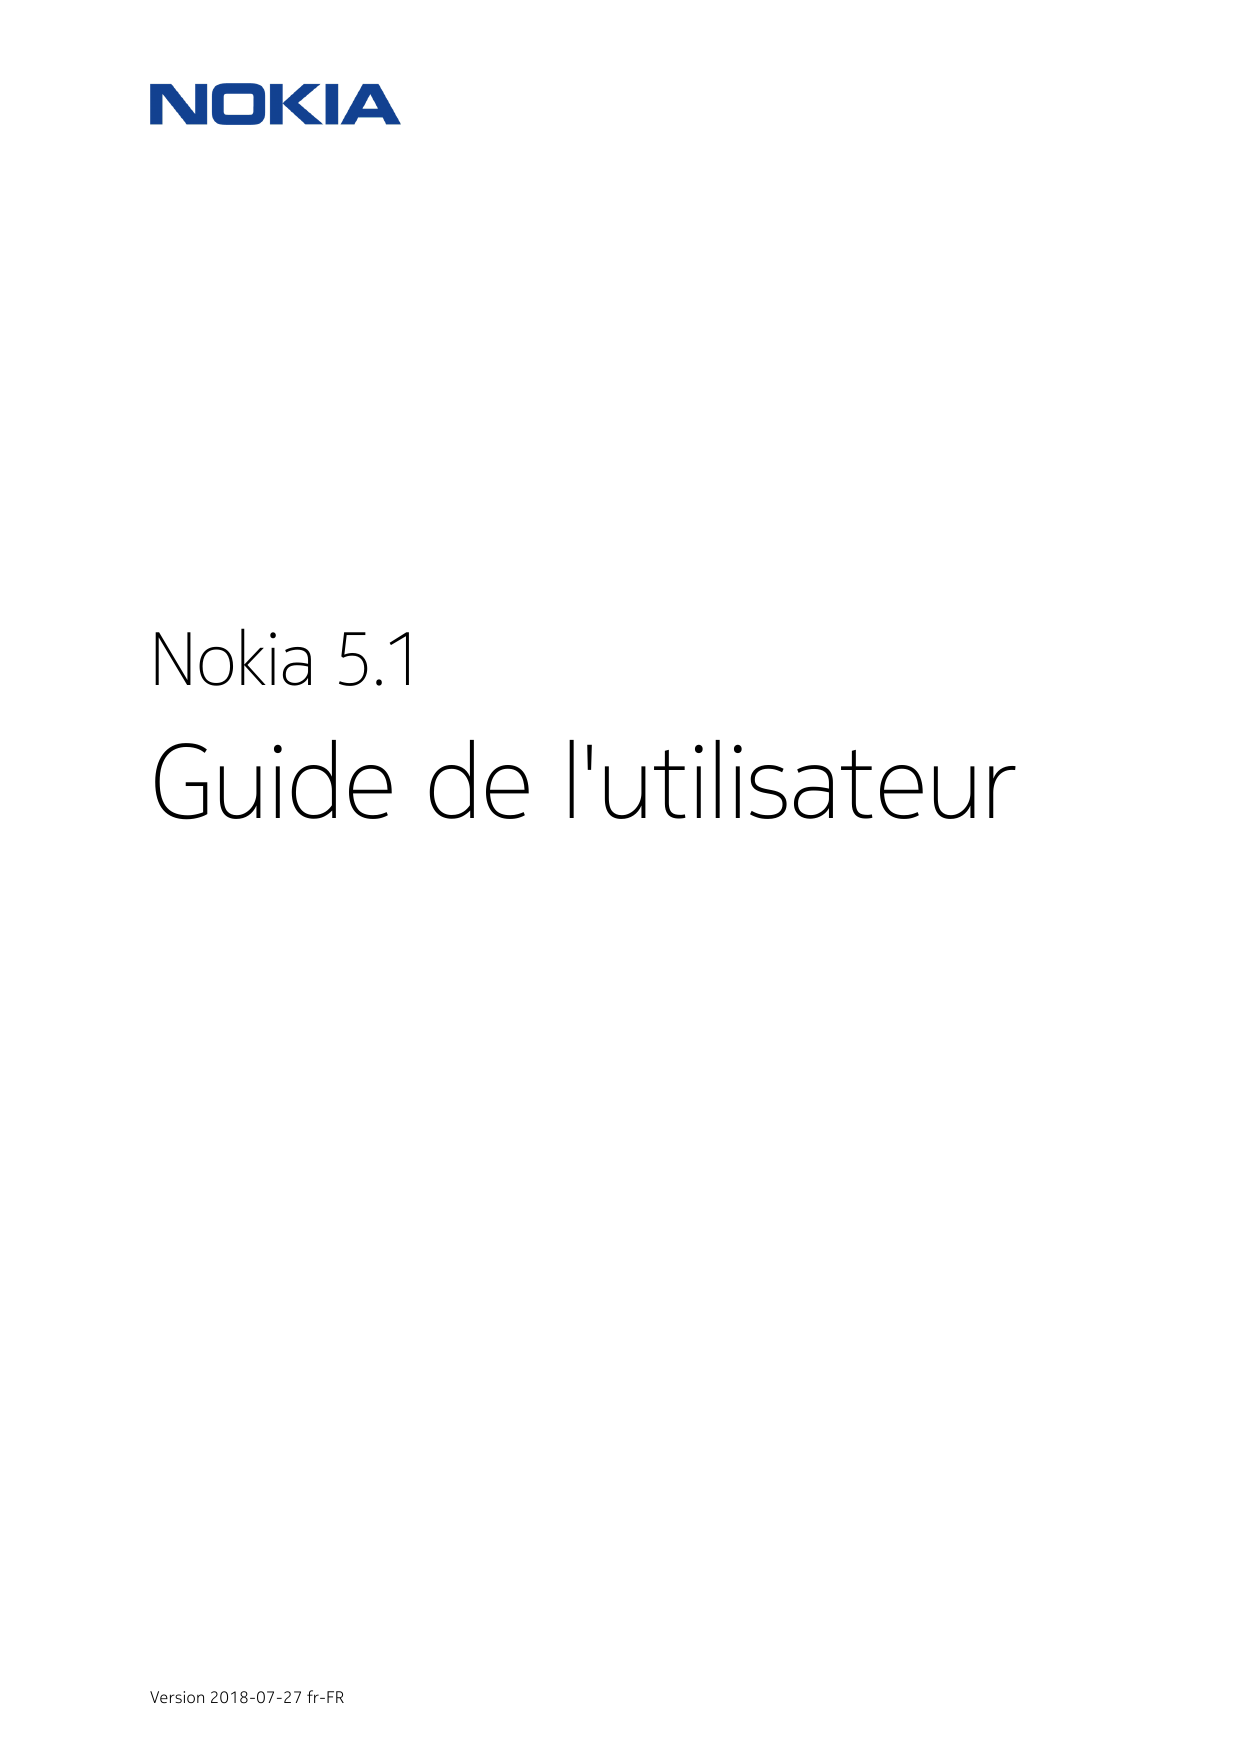 Nokia 5.1Guide de l'utilisateurVersion 2018-07-27 fr-FR